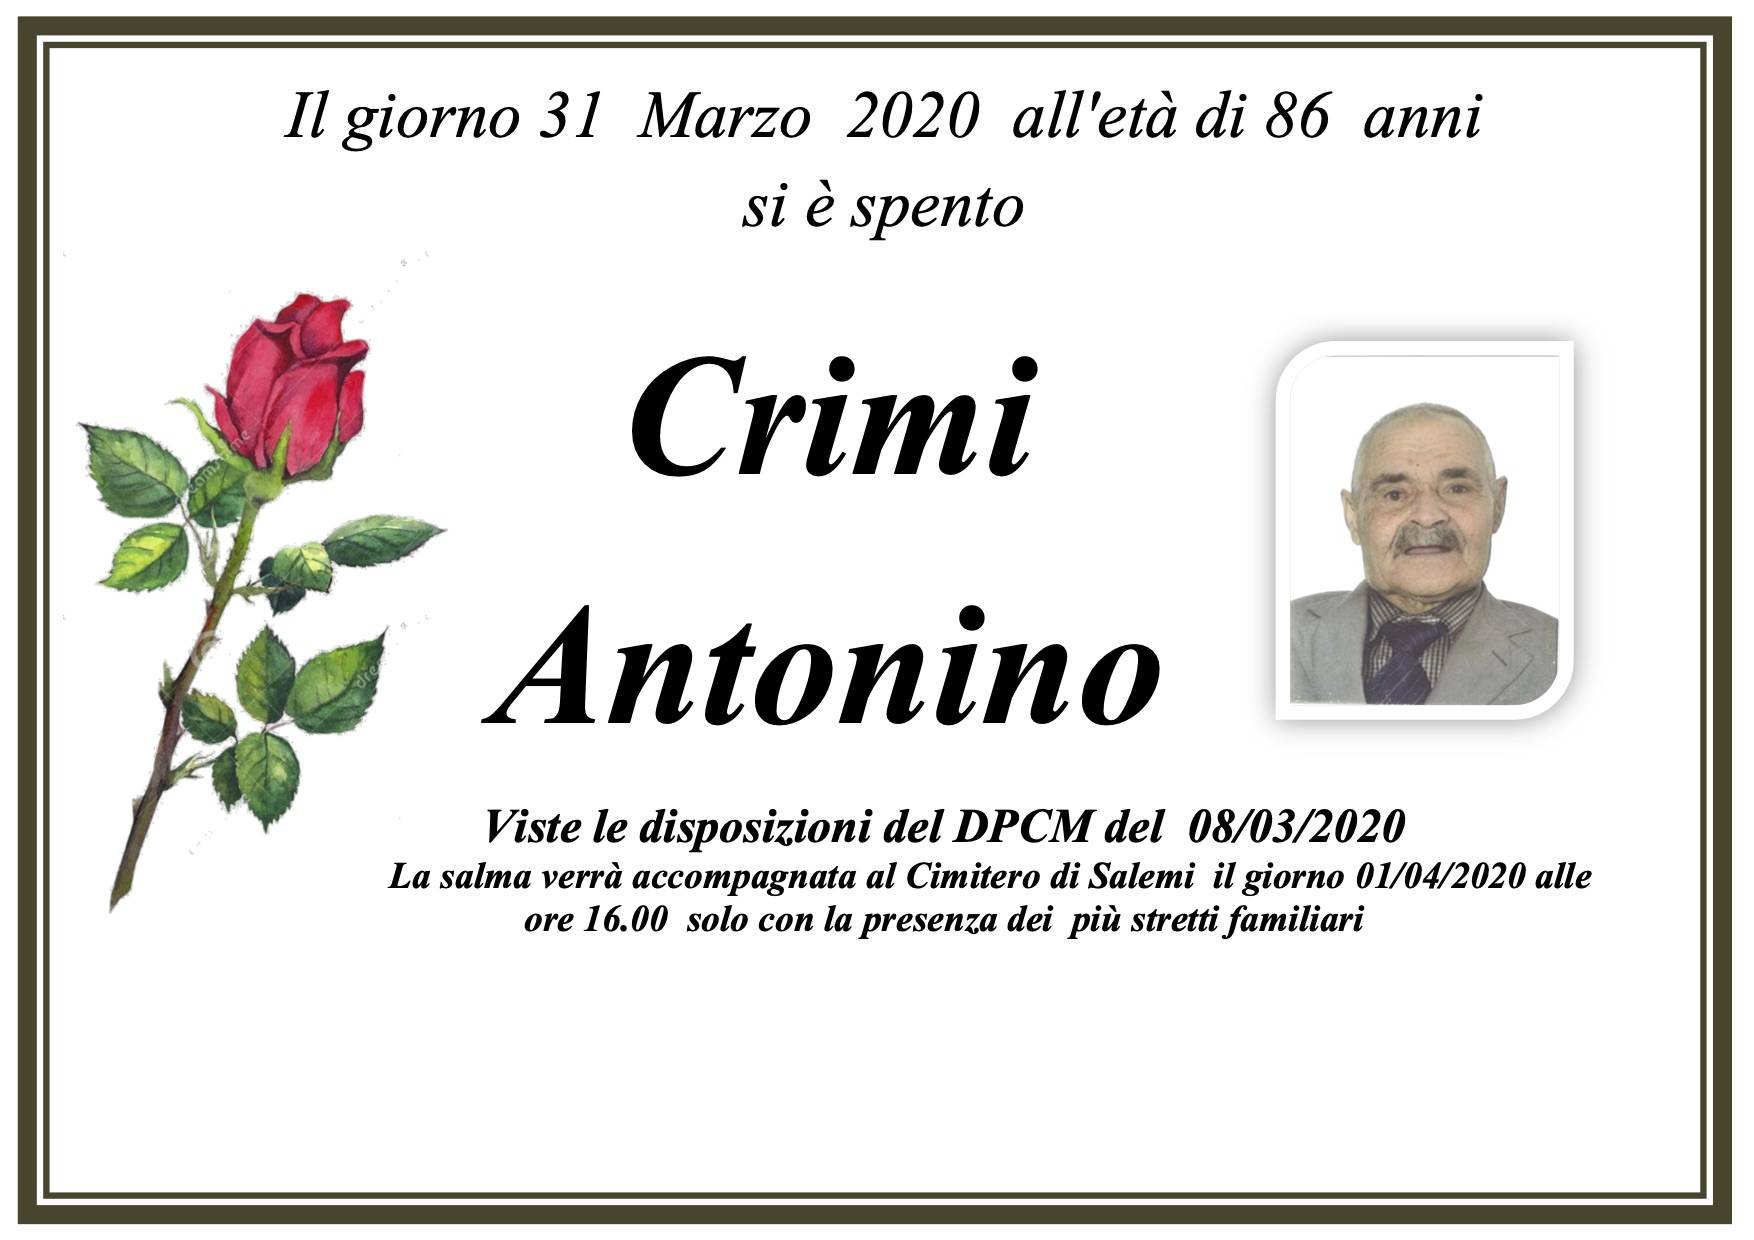 Antonino Crimi